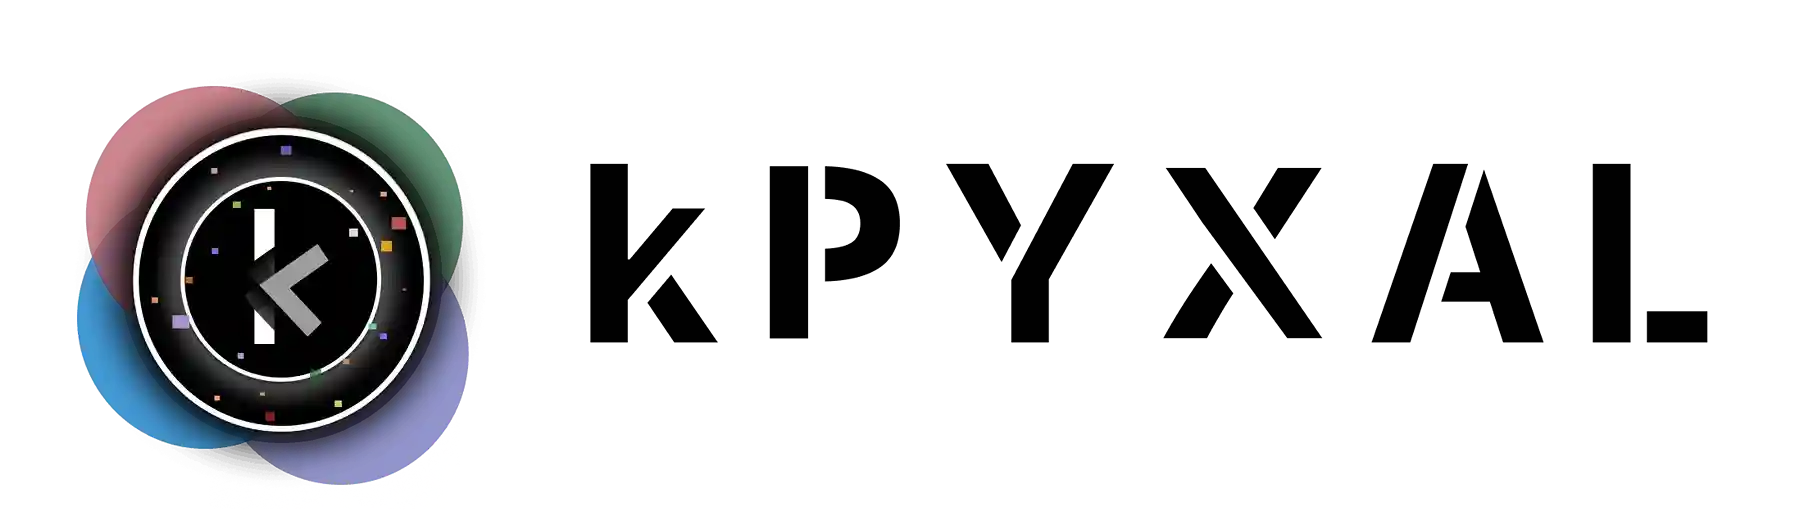 kpyxal_logo